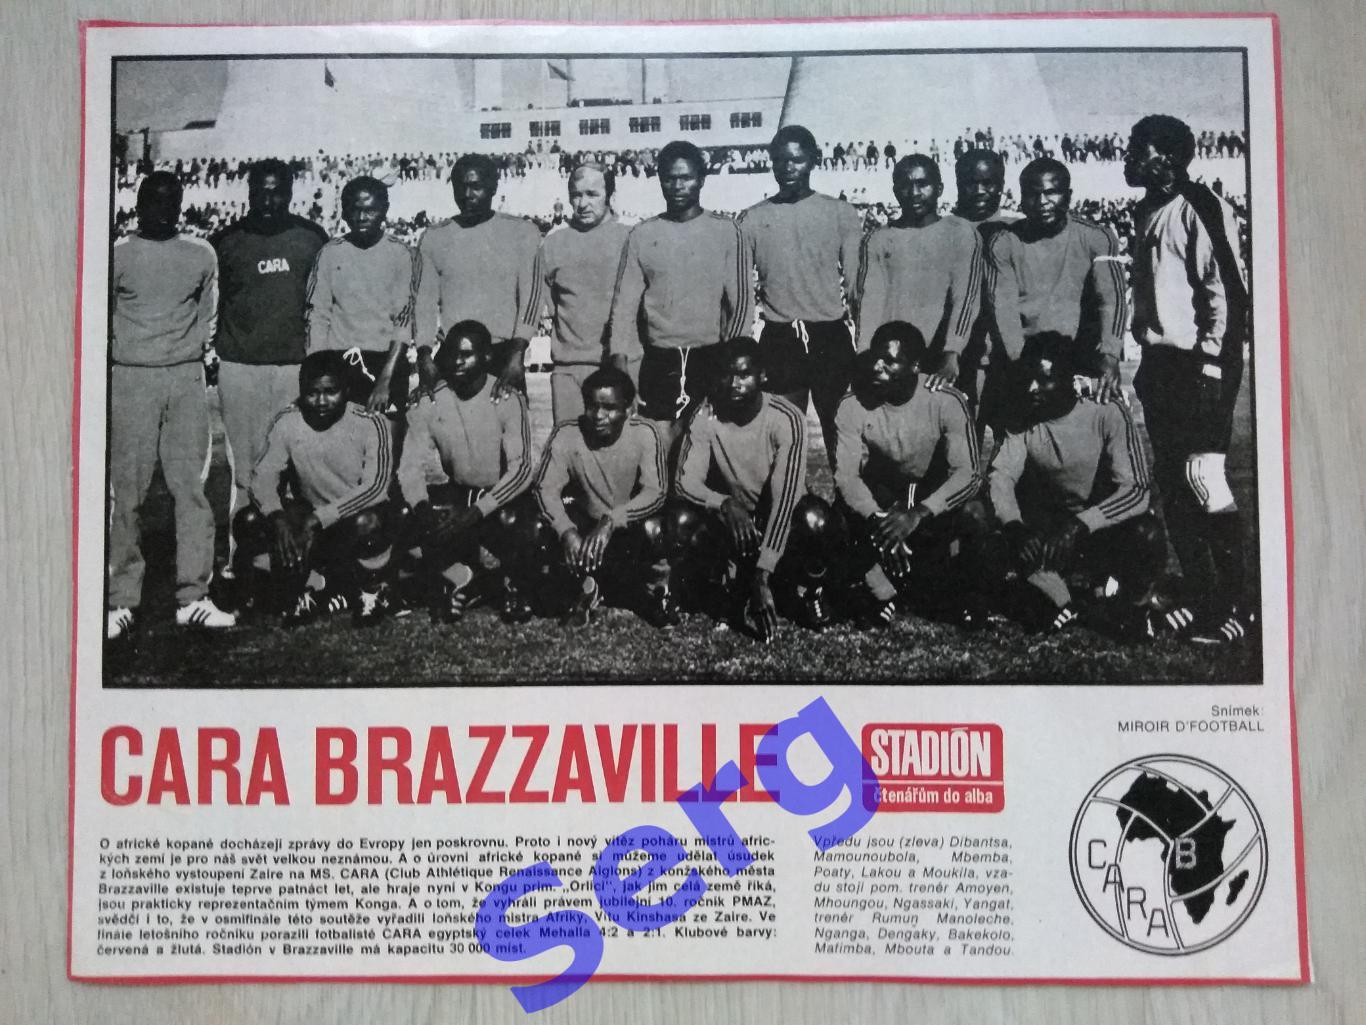 Постер КАРА Браззавиль, Конго из журнала Стадион (Stadion)